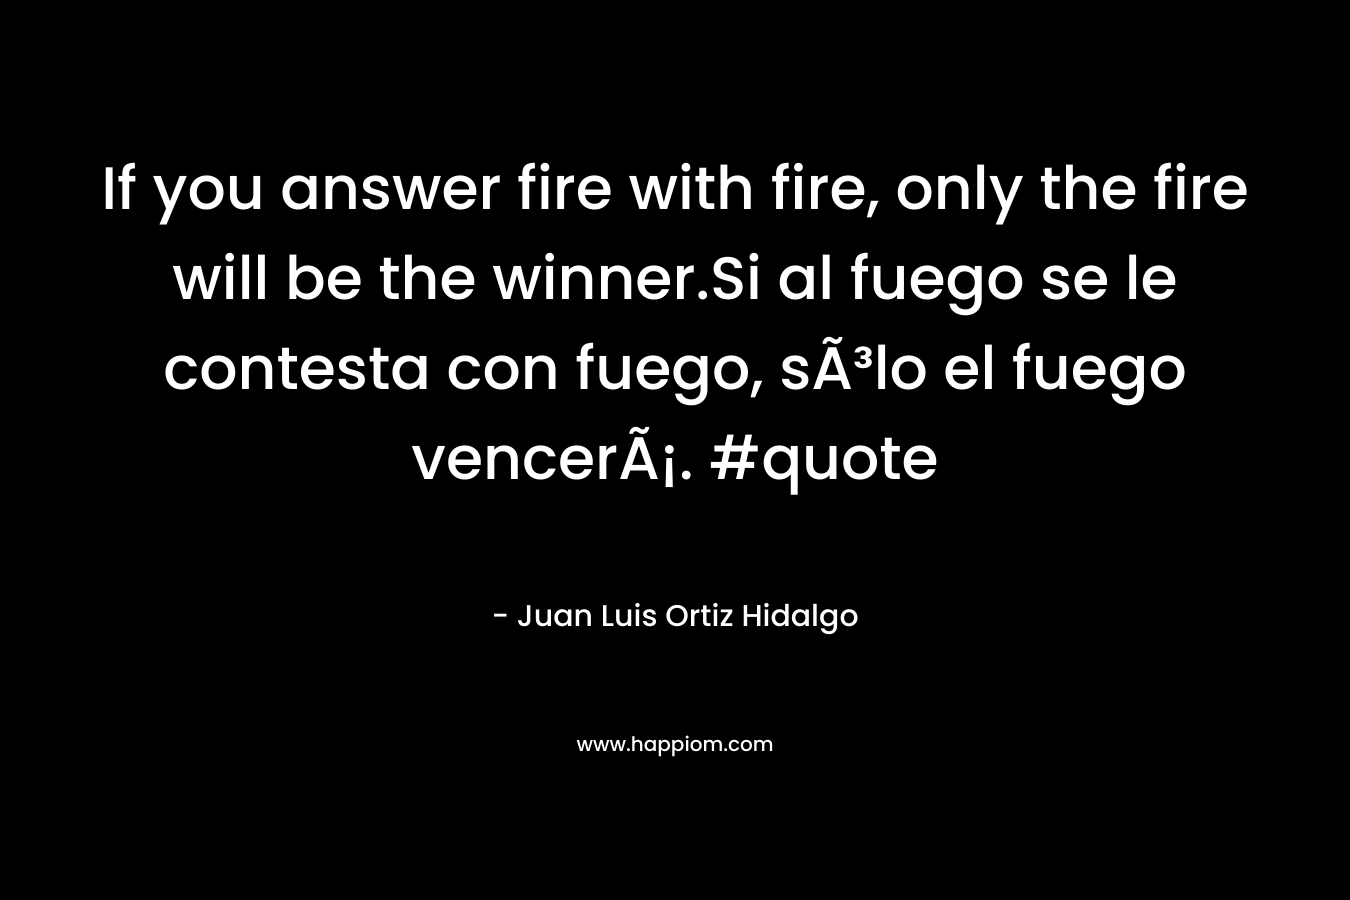 If you answer fire with fire, only the fire will be the winner.Si al fuego se le contesta con fuego, sÃ³lo el fuego vencerÃ¡. #quote – Juan Luis Ortiz Hidalgo